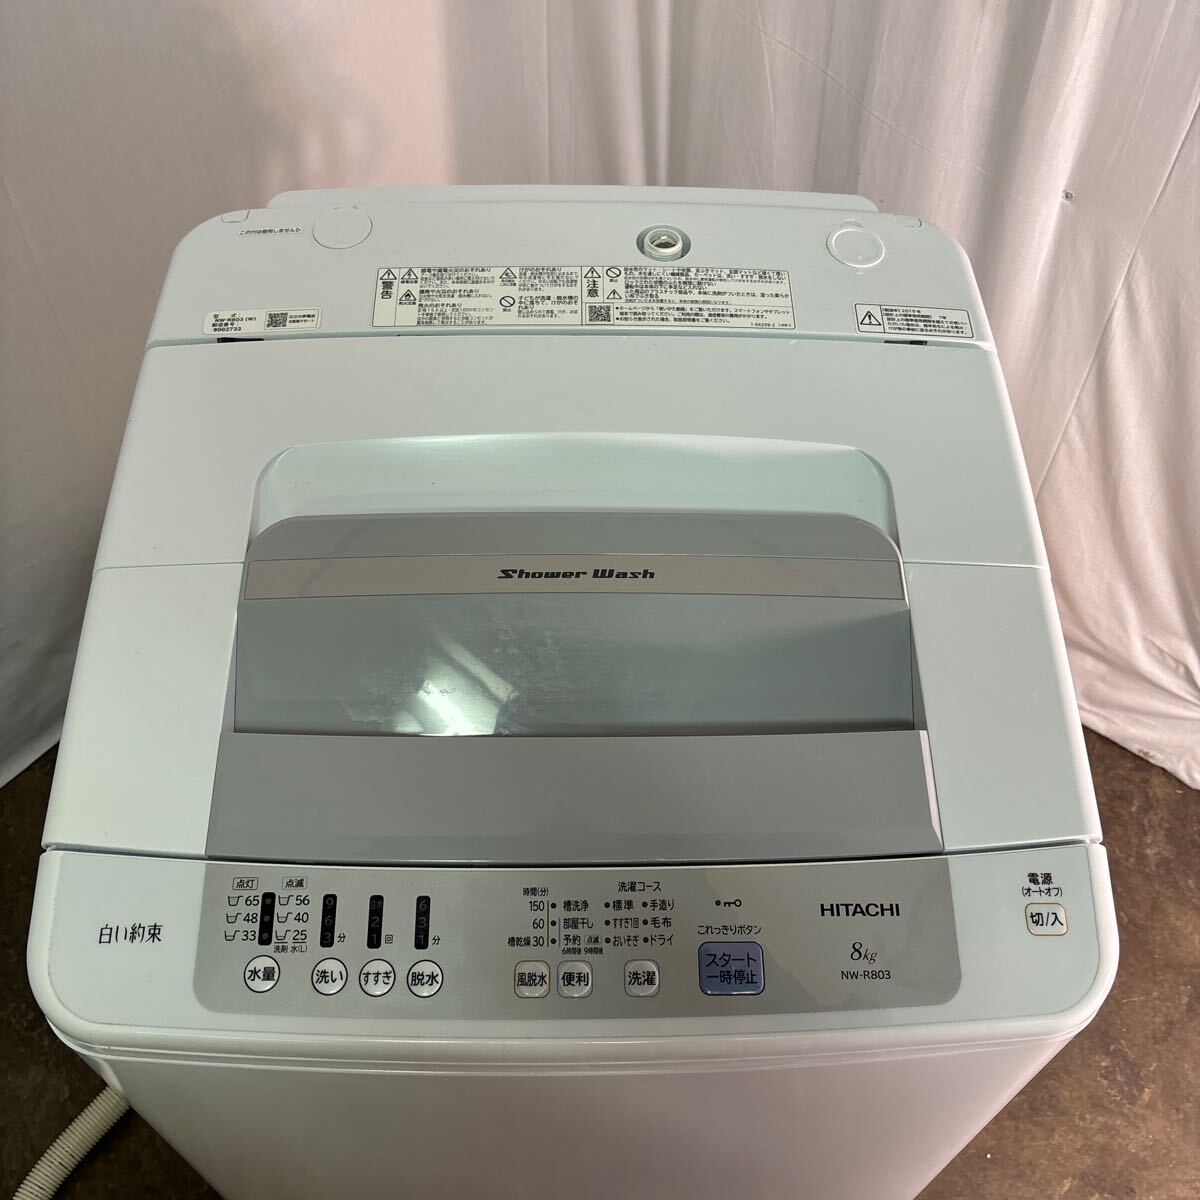 全自動洗濯機 HITACHI 日立 HITACHI 白い約束 8kg 2019年式 NW-R803_画像2